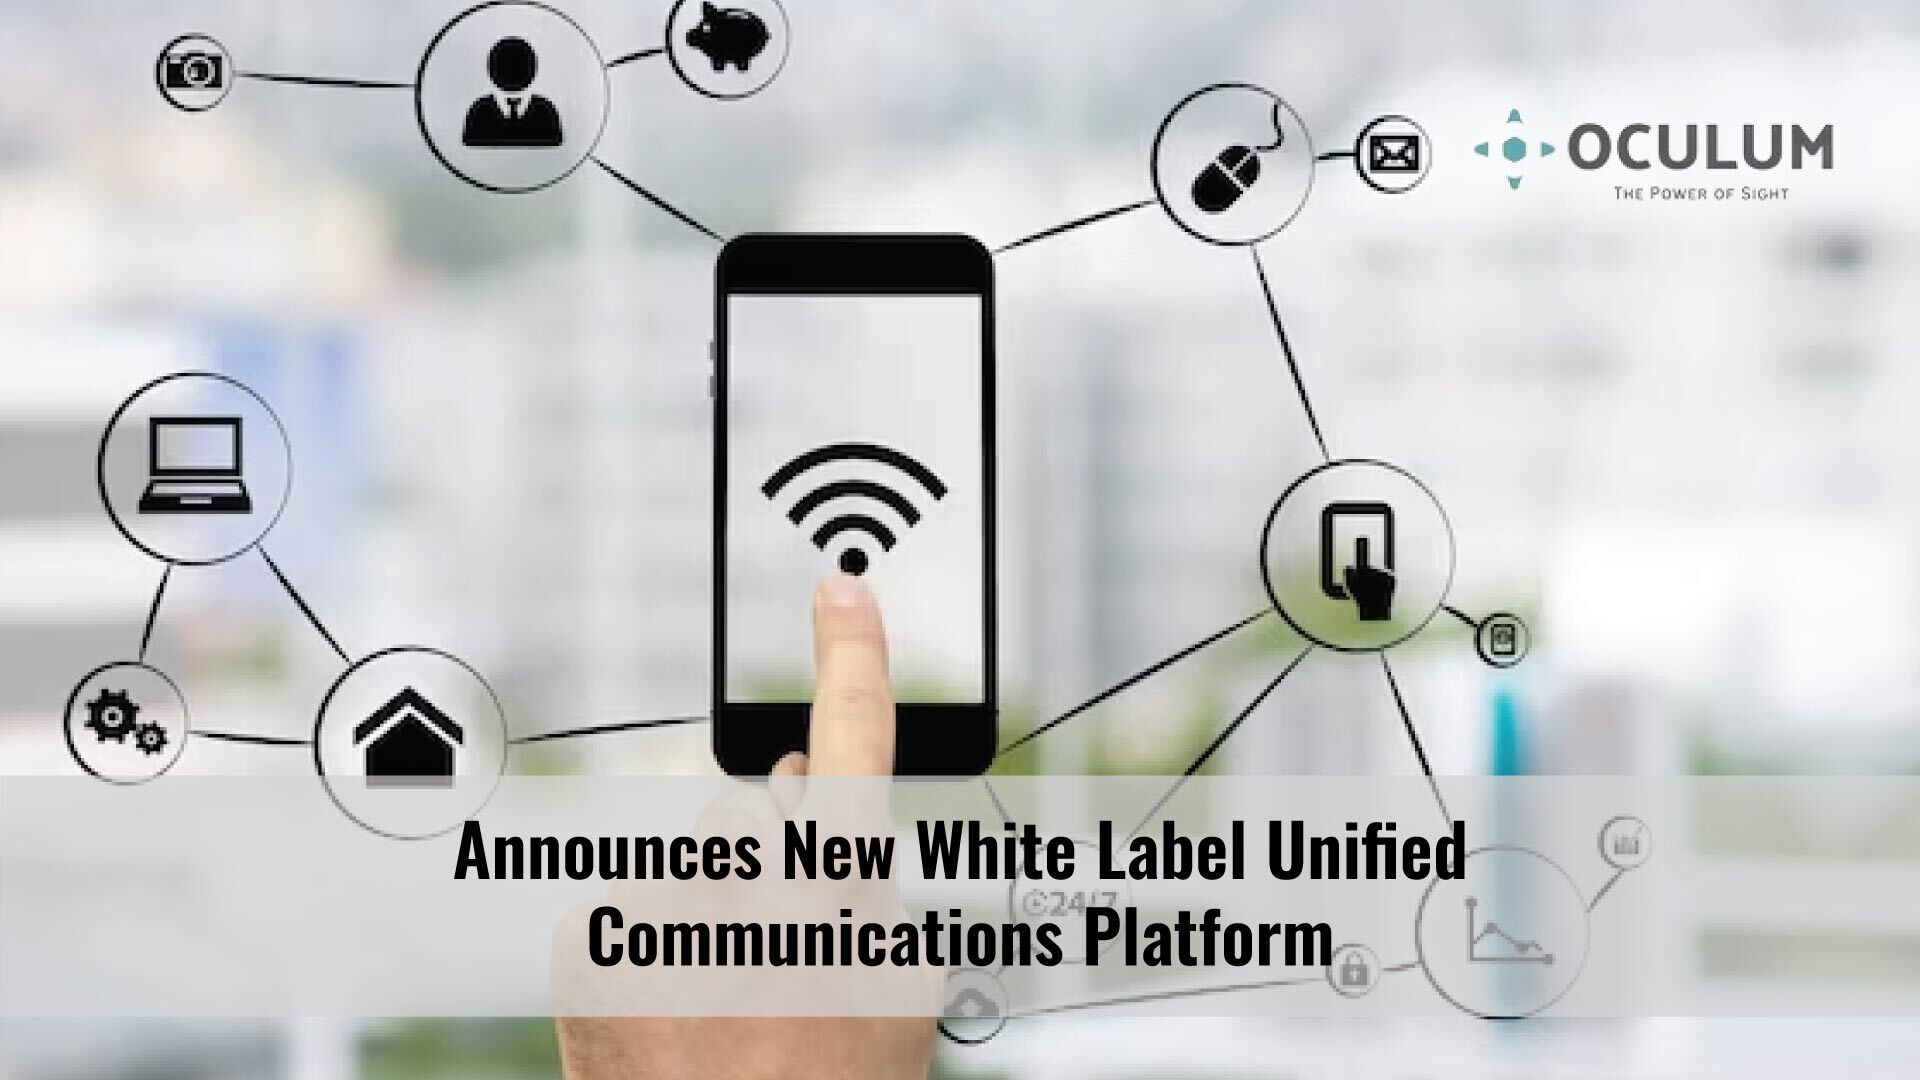 Oculum Announces New White Label Unified Communications Platform